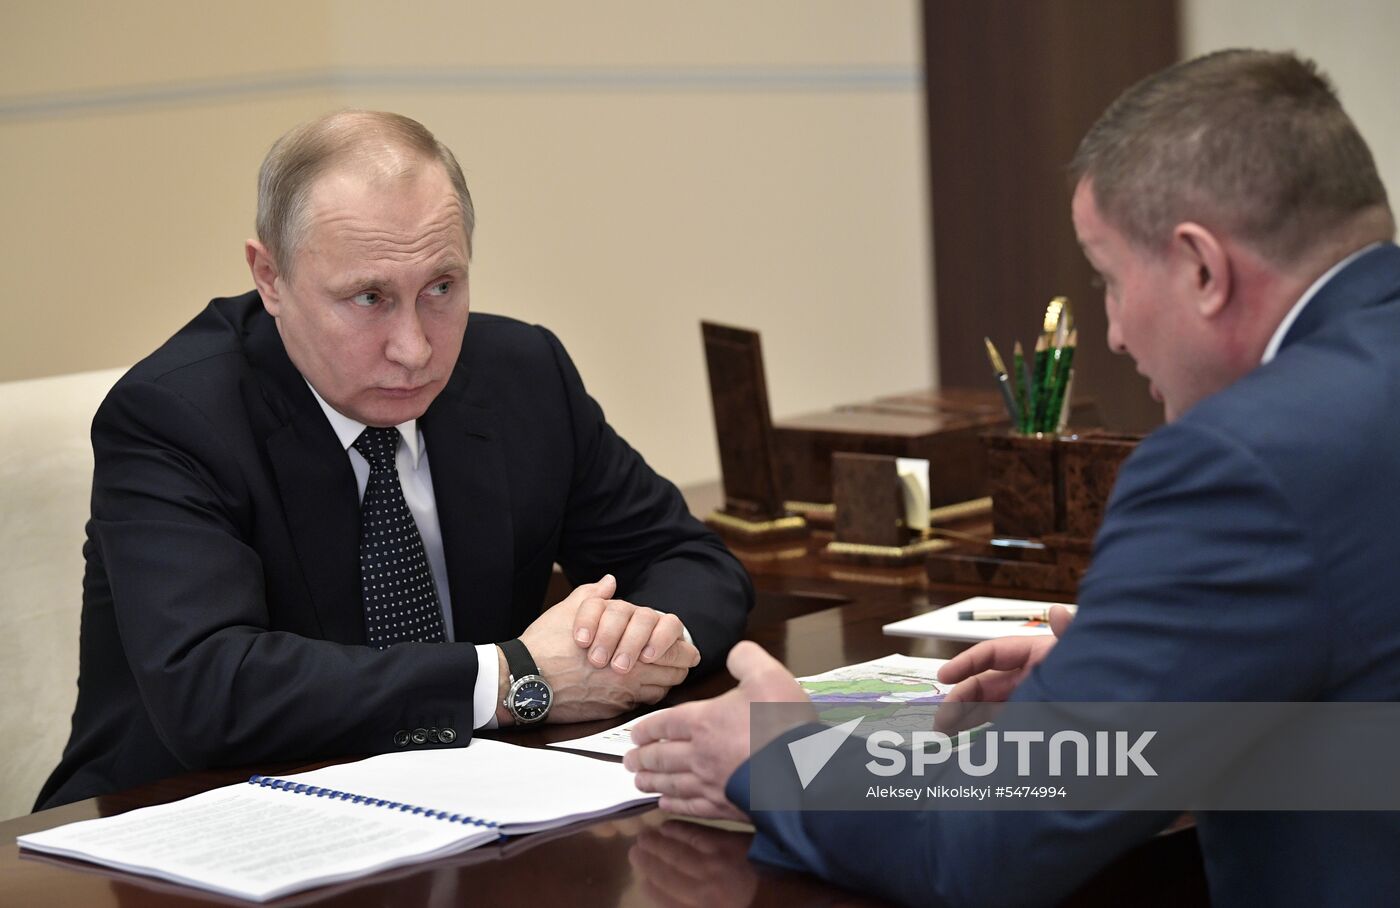 President Putin meets with Volgograd Region Governor Bocharov